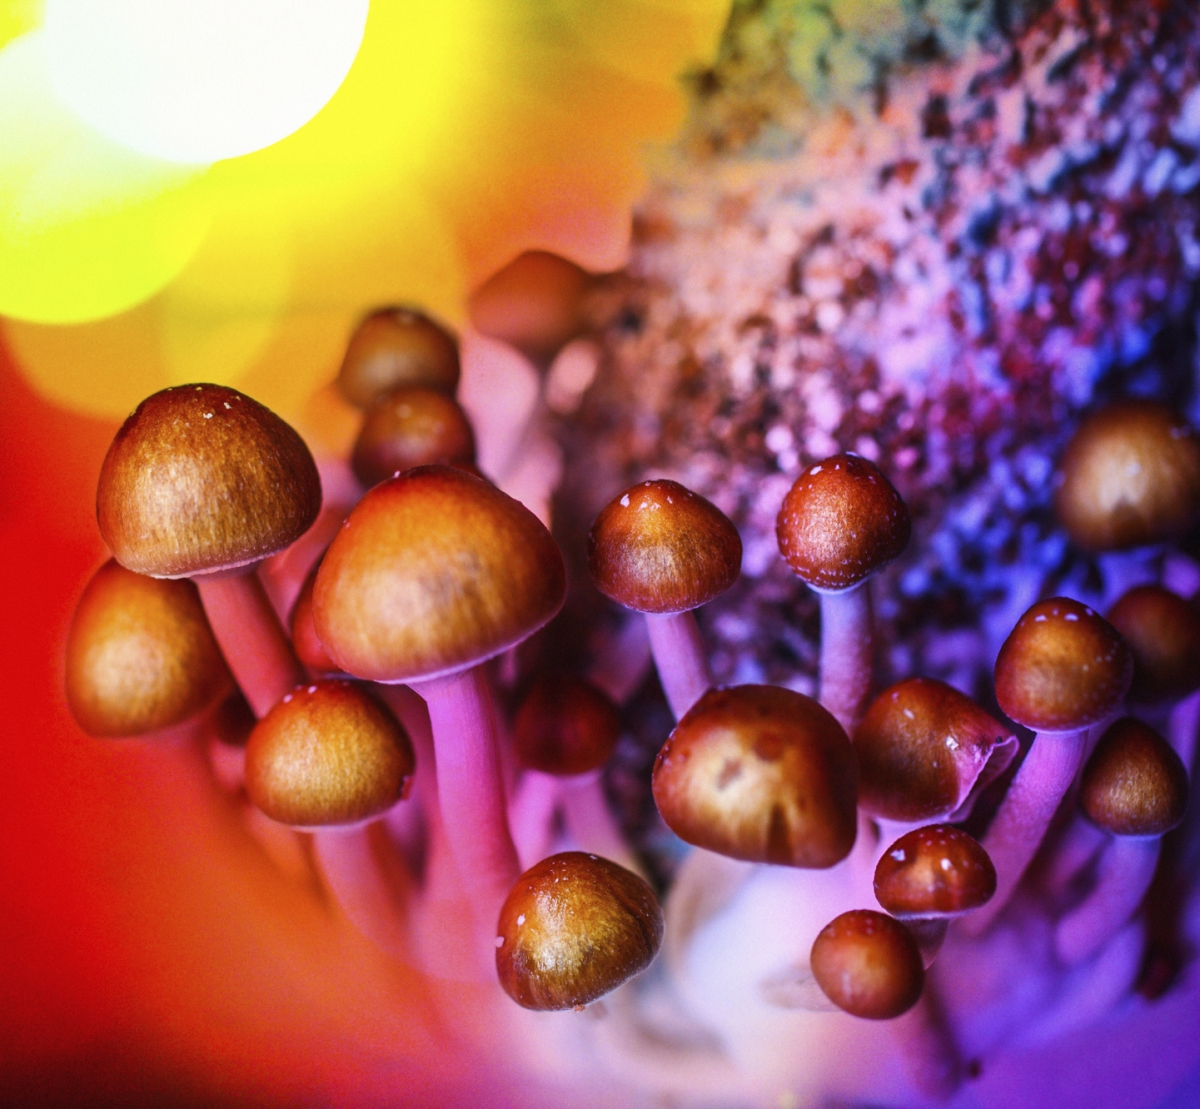 Magic mushrooms: Hallucinogenic compound in drug could help alleviate